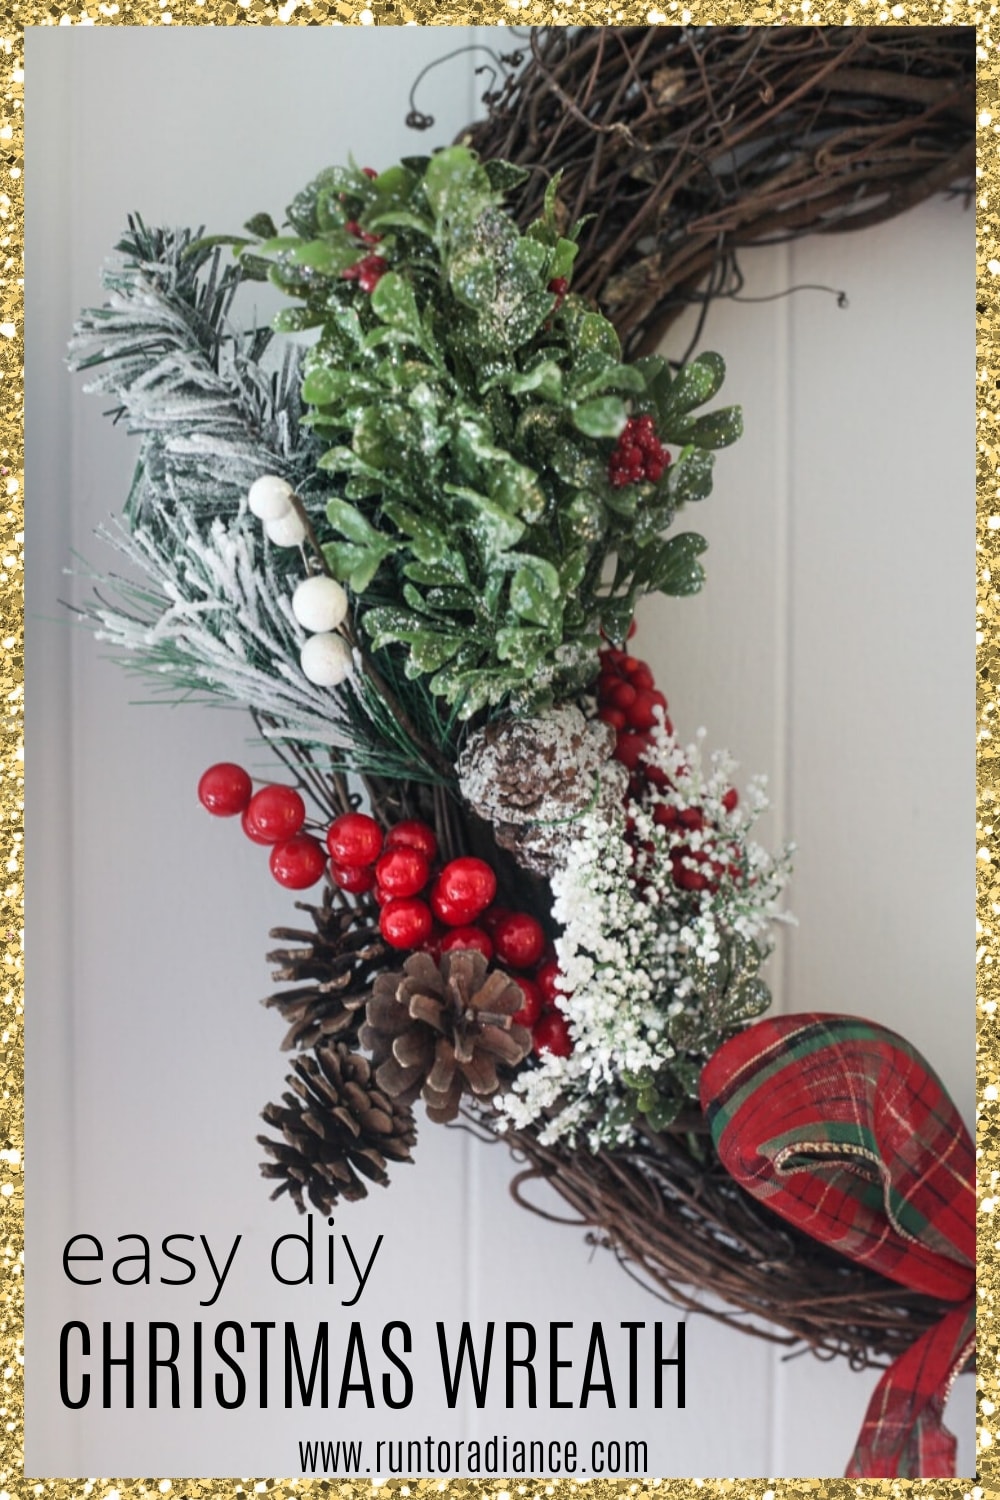 Easy DIY Christmas Wreath - How to Make a Grapevine Christmas Wreath